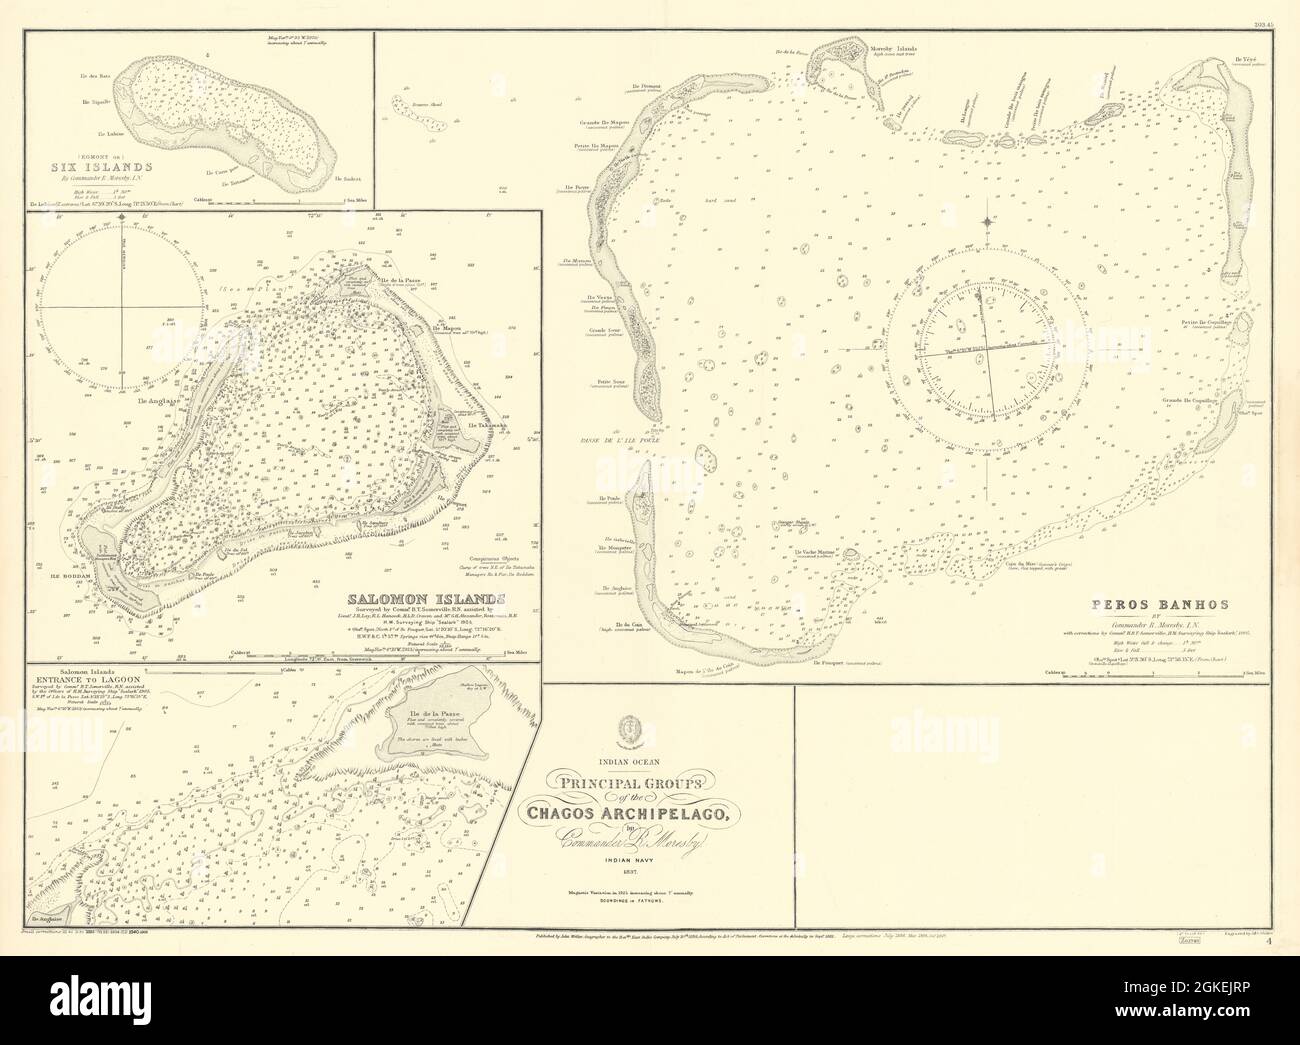 Chagos Islands Peros Banhos Egmont Salomon EAST INDIA CO. chart 1839 (1940) map Stock Photo